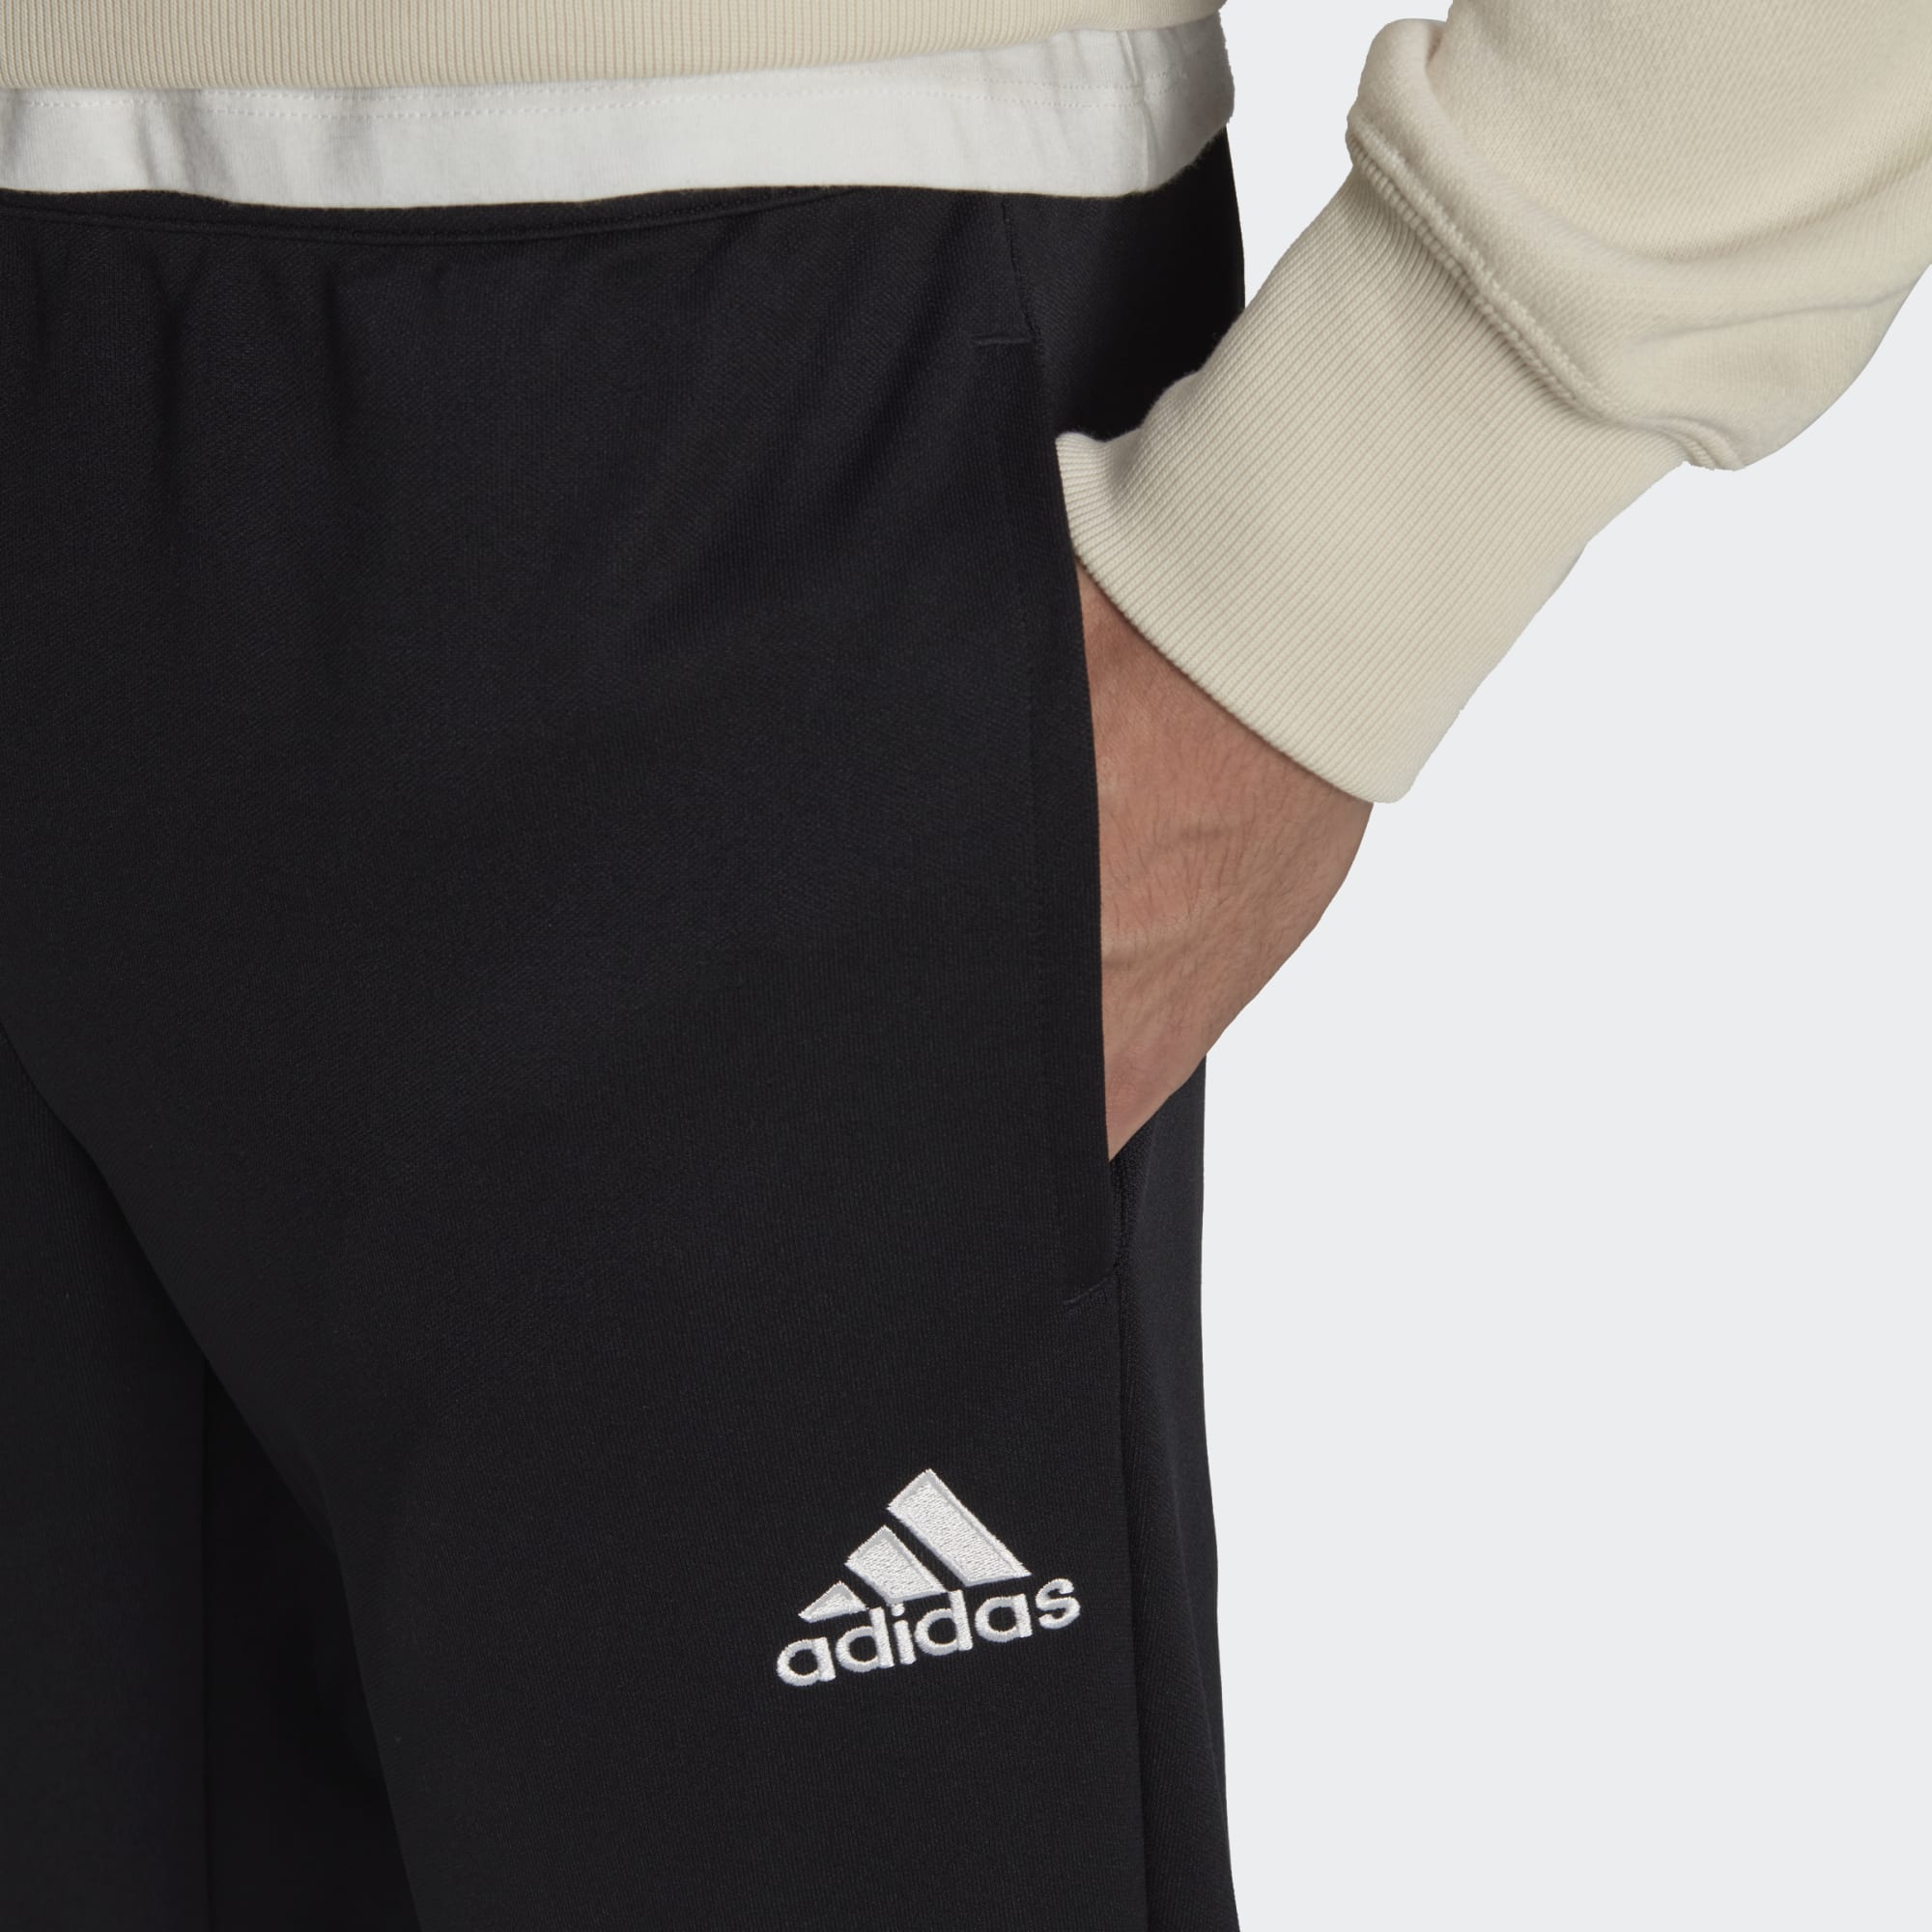 Adidas Ent22 Black Training Pants - Adult